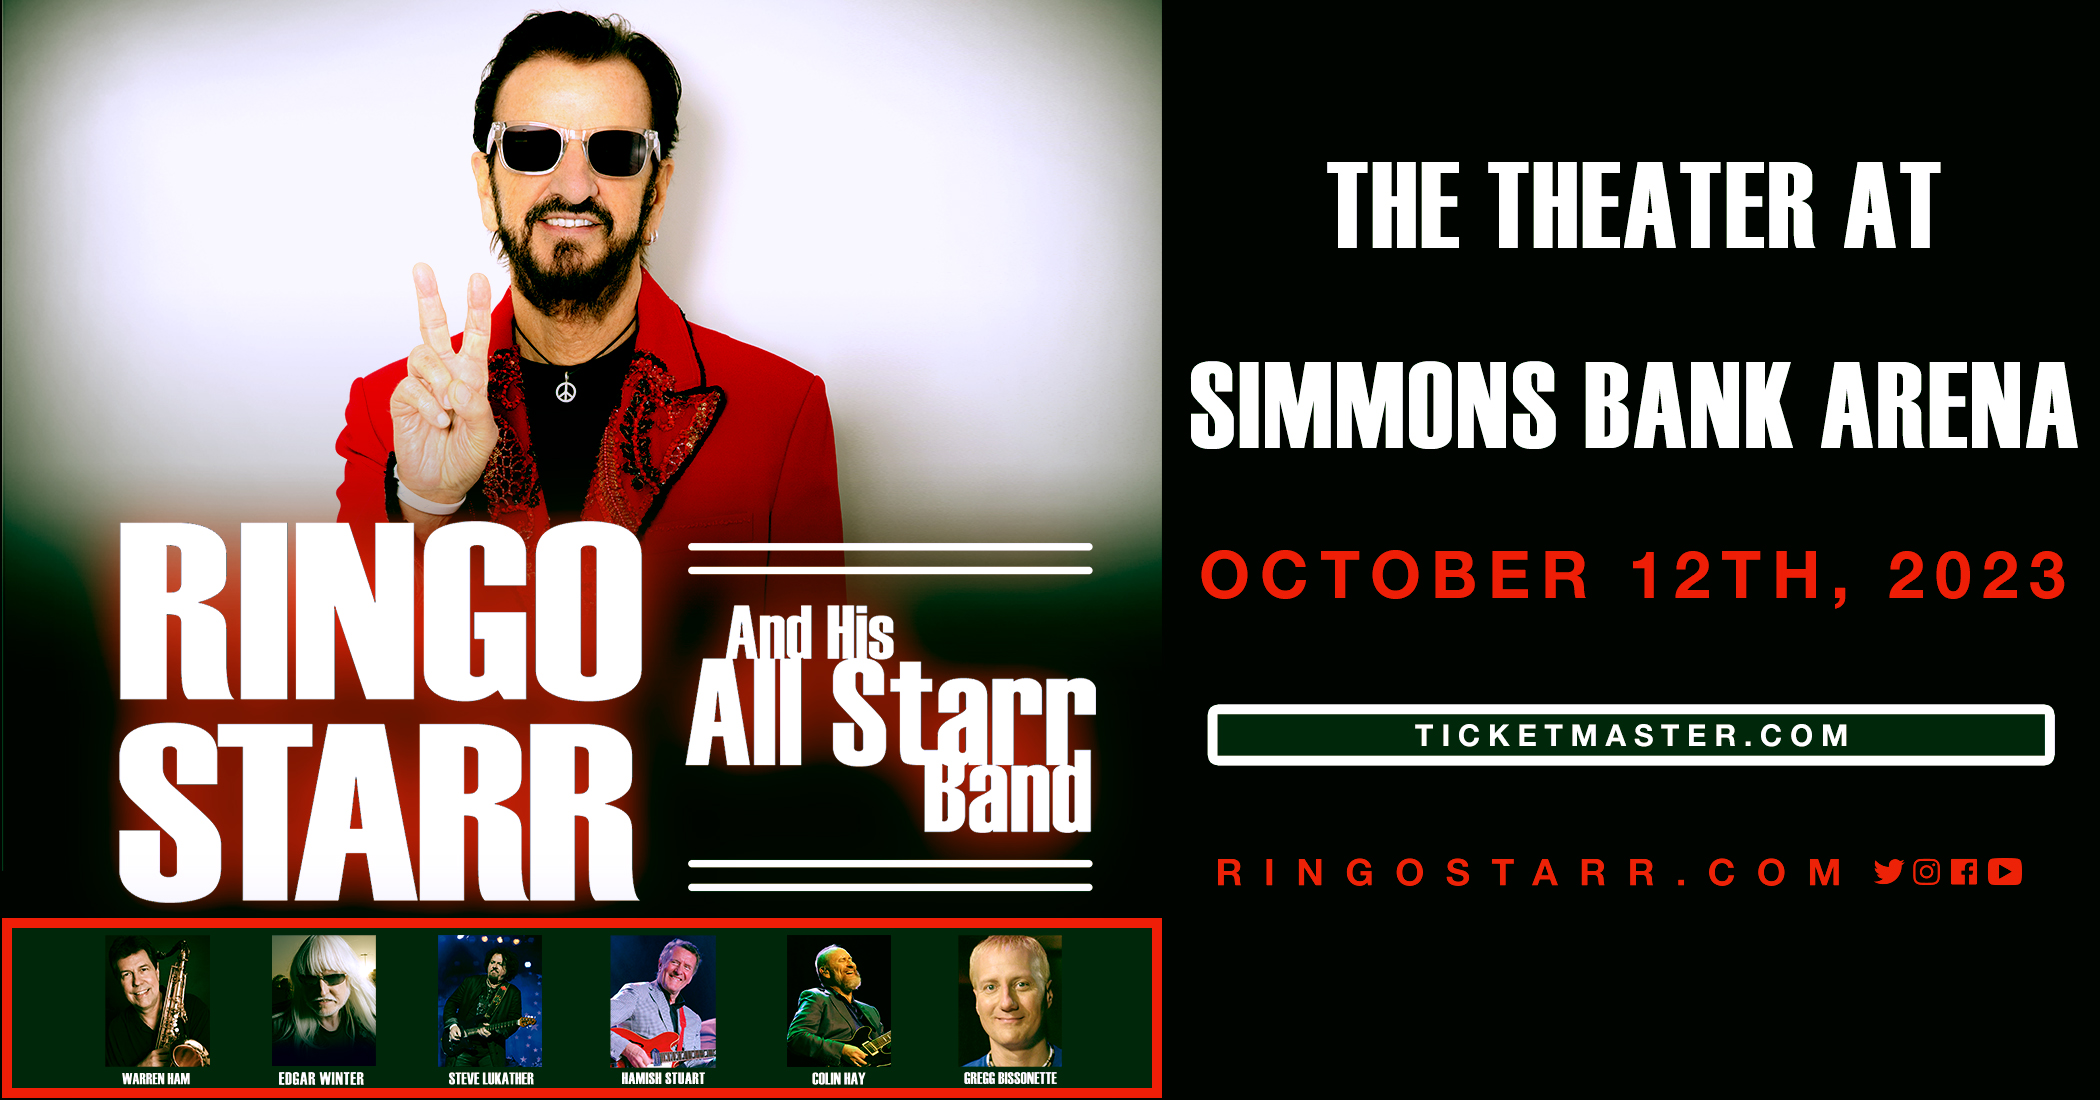 Ringo Star's All Star Band! 10/12/2023